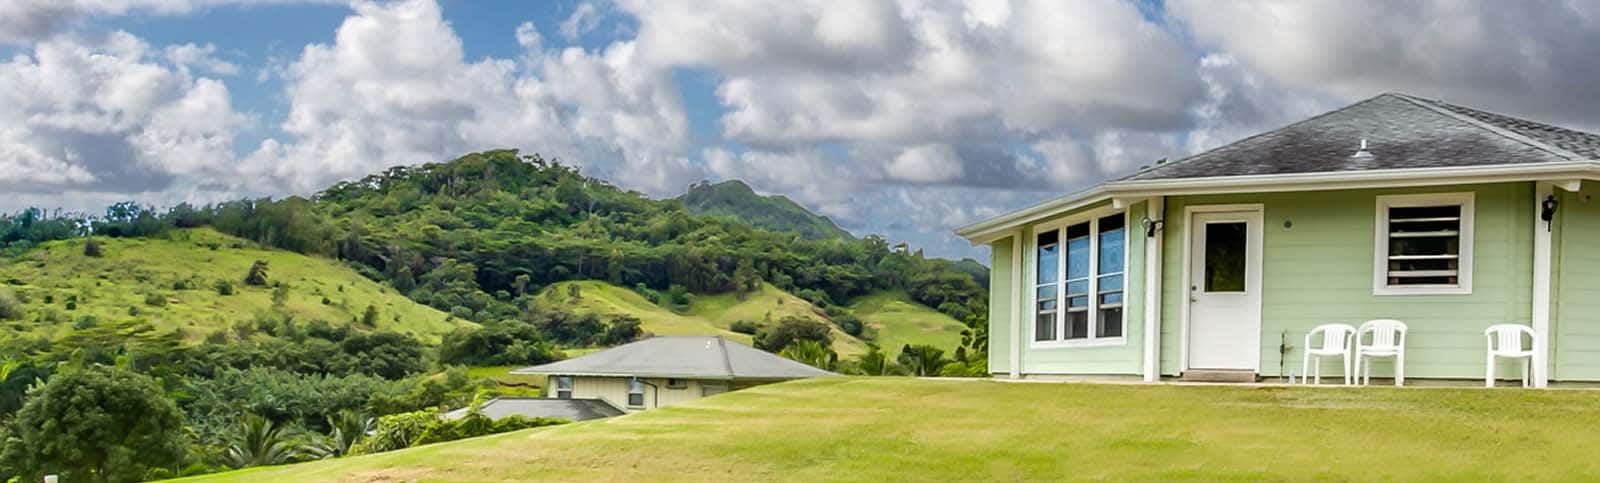 Home for Sale in Kauai